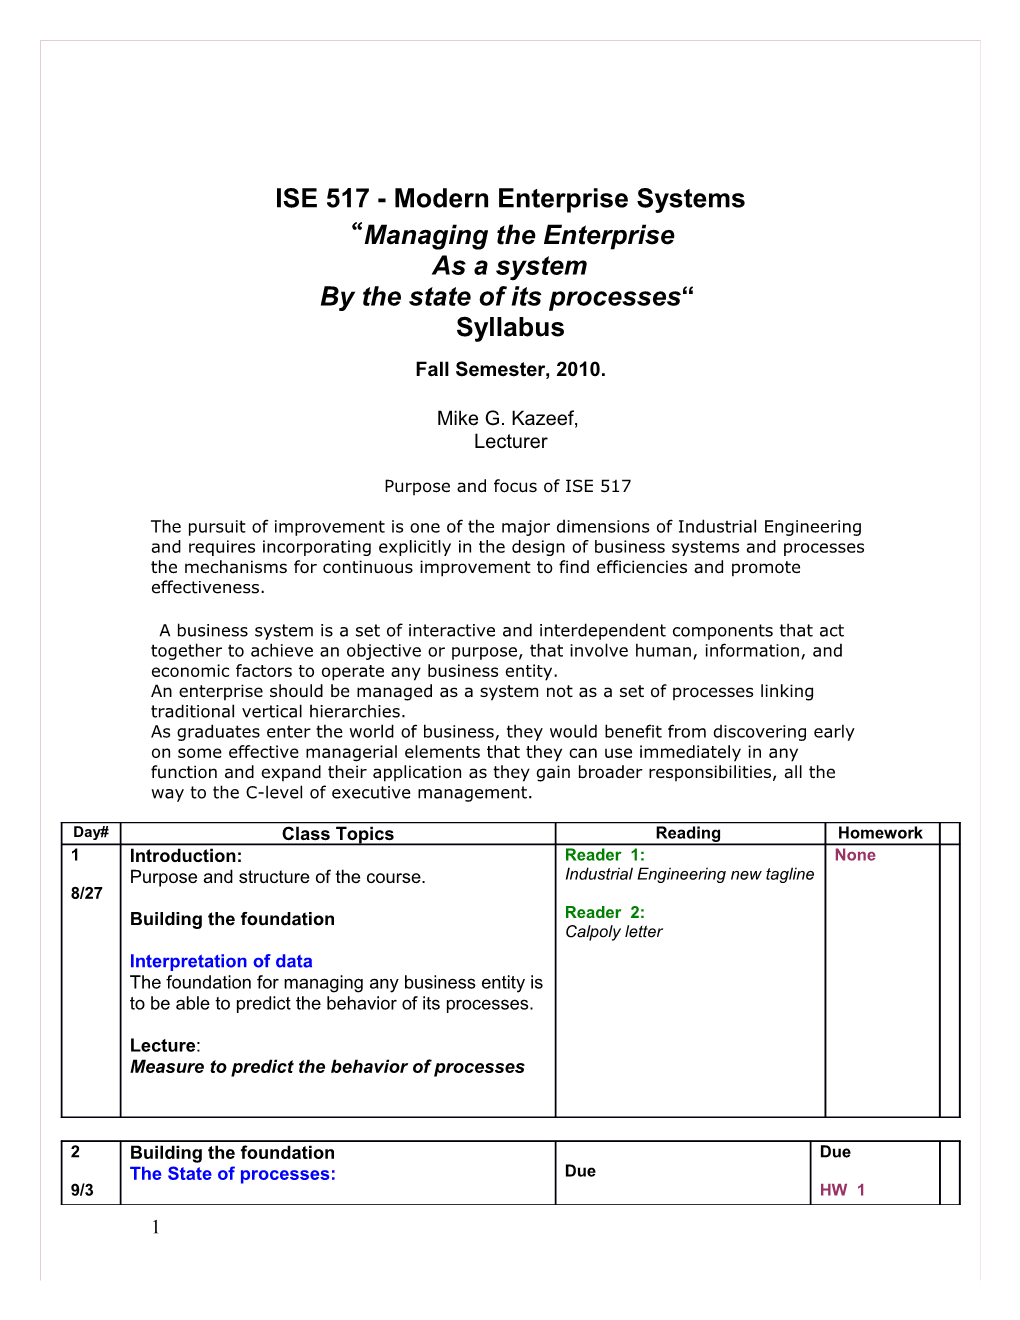 ISE 517 Modern Enterprise Systems